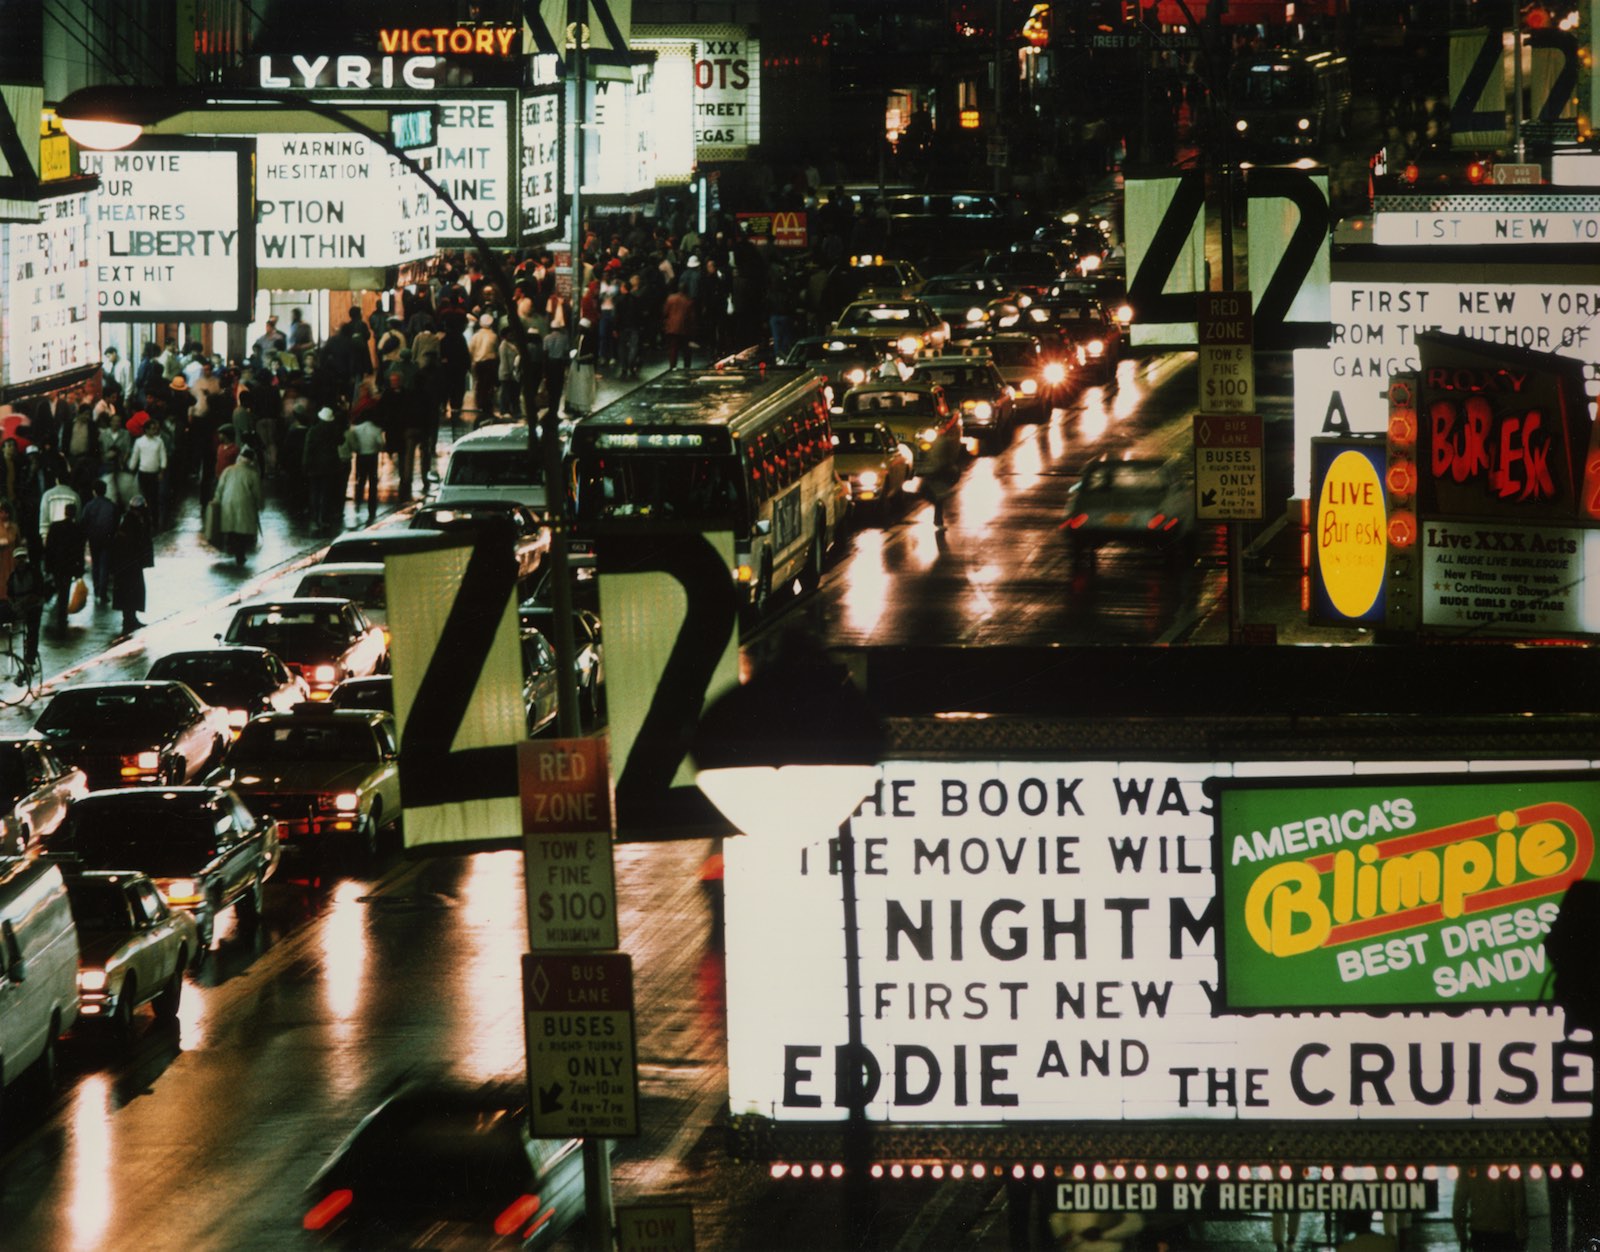 Times Square, NY, 1983